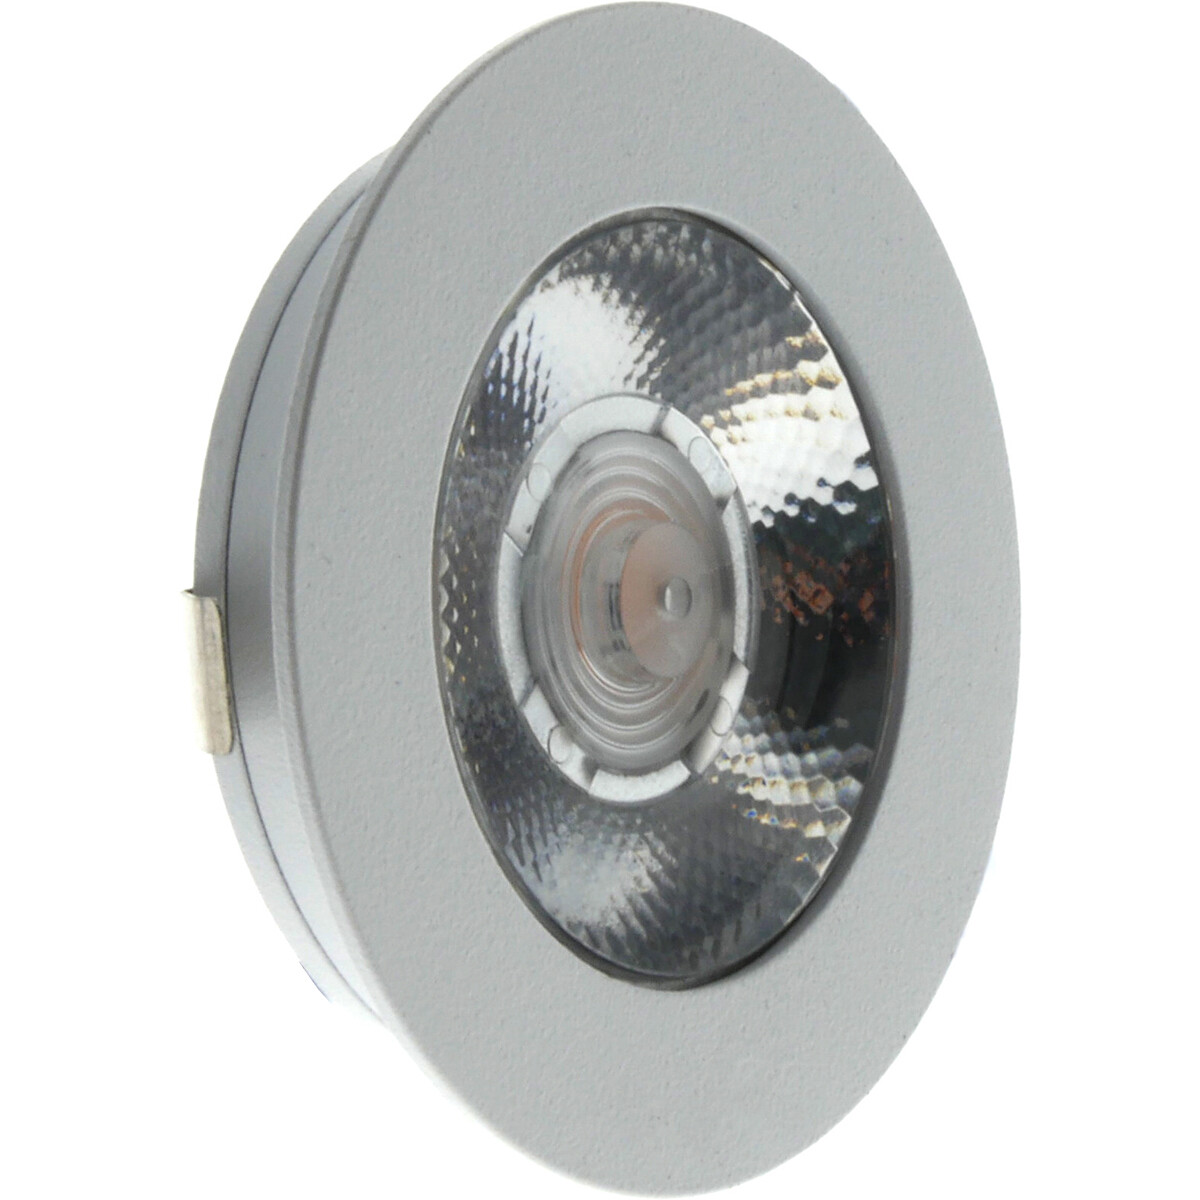 EcoDim - LED Spot Keukenverlichting - ED-10044 - 3W - Warm Wit 2700K - Dimbaar - Waterdicht IP54 - O